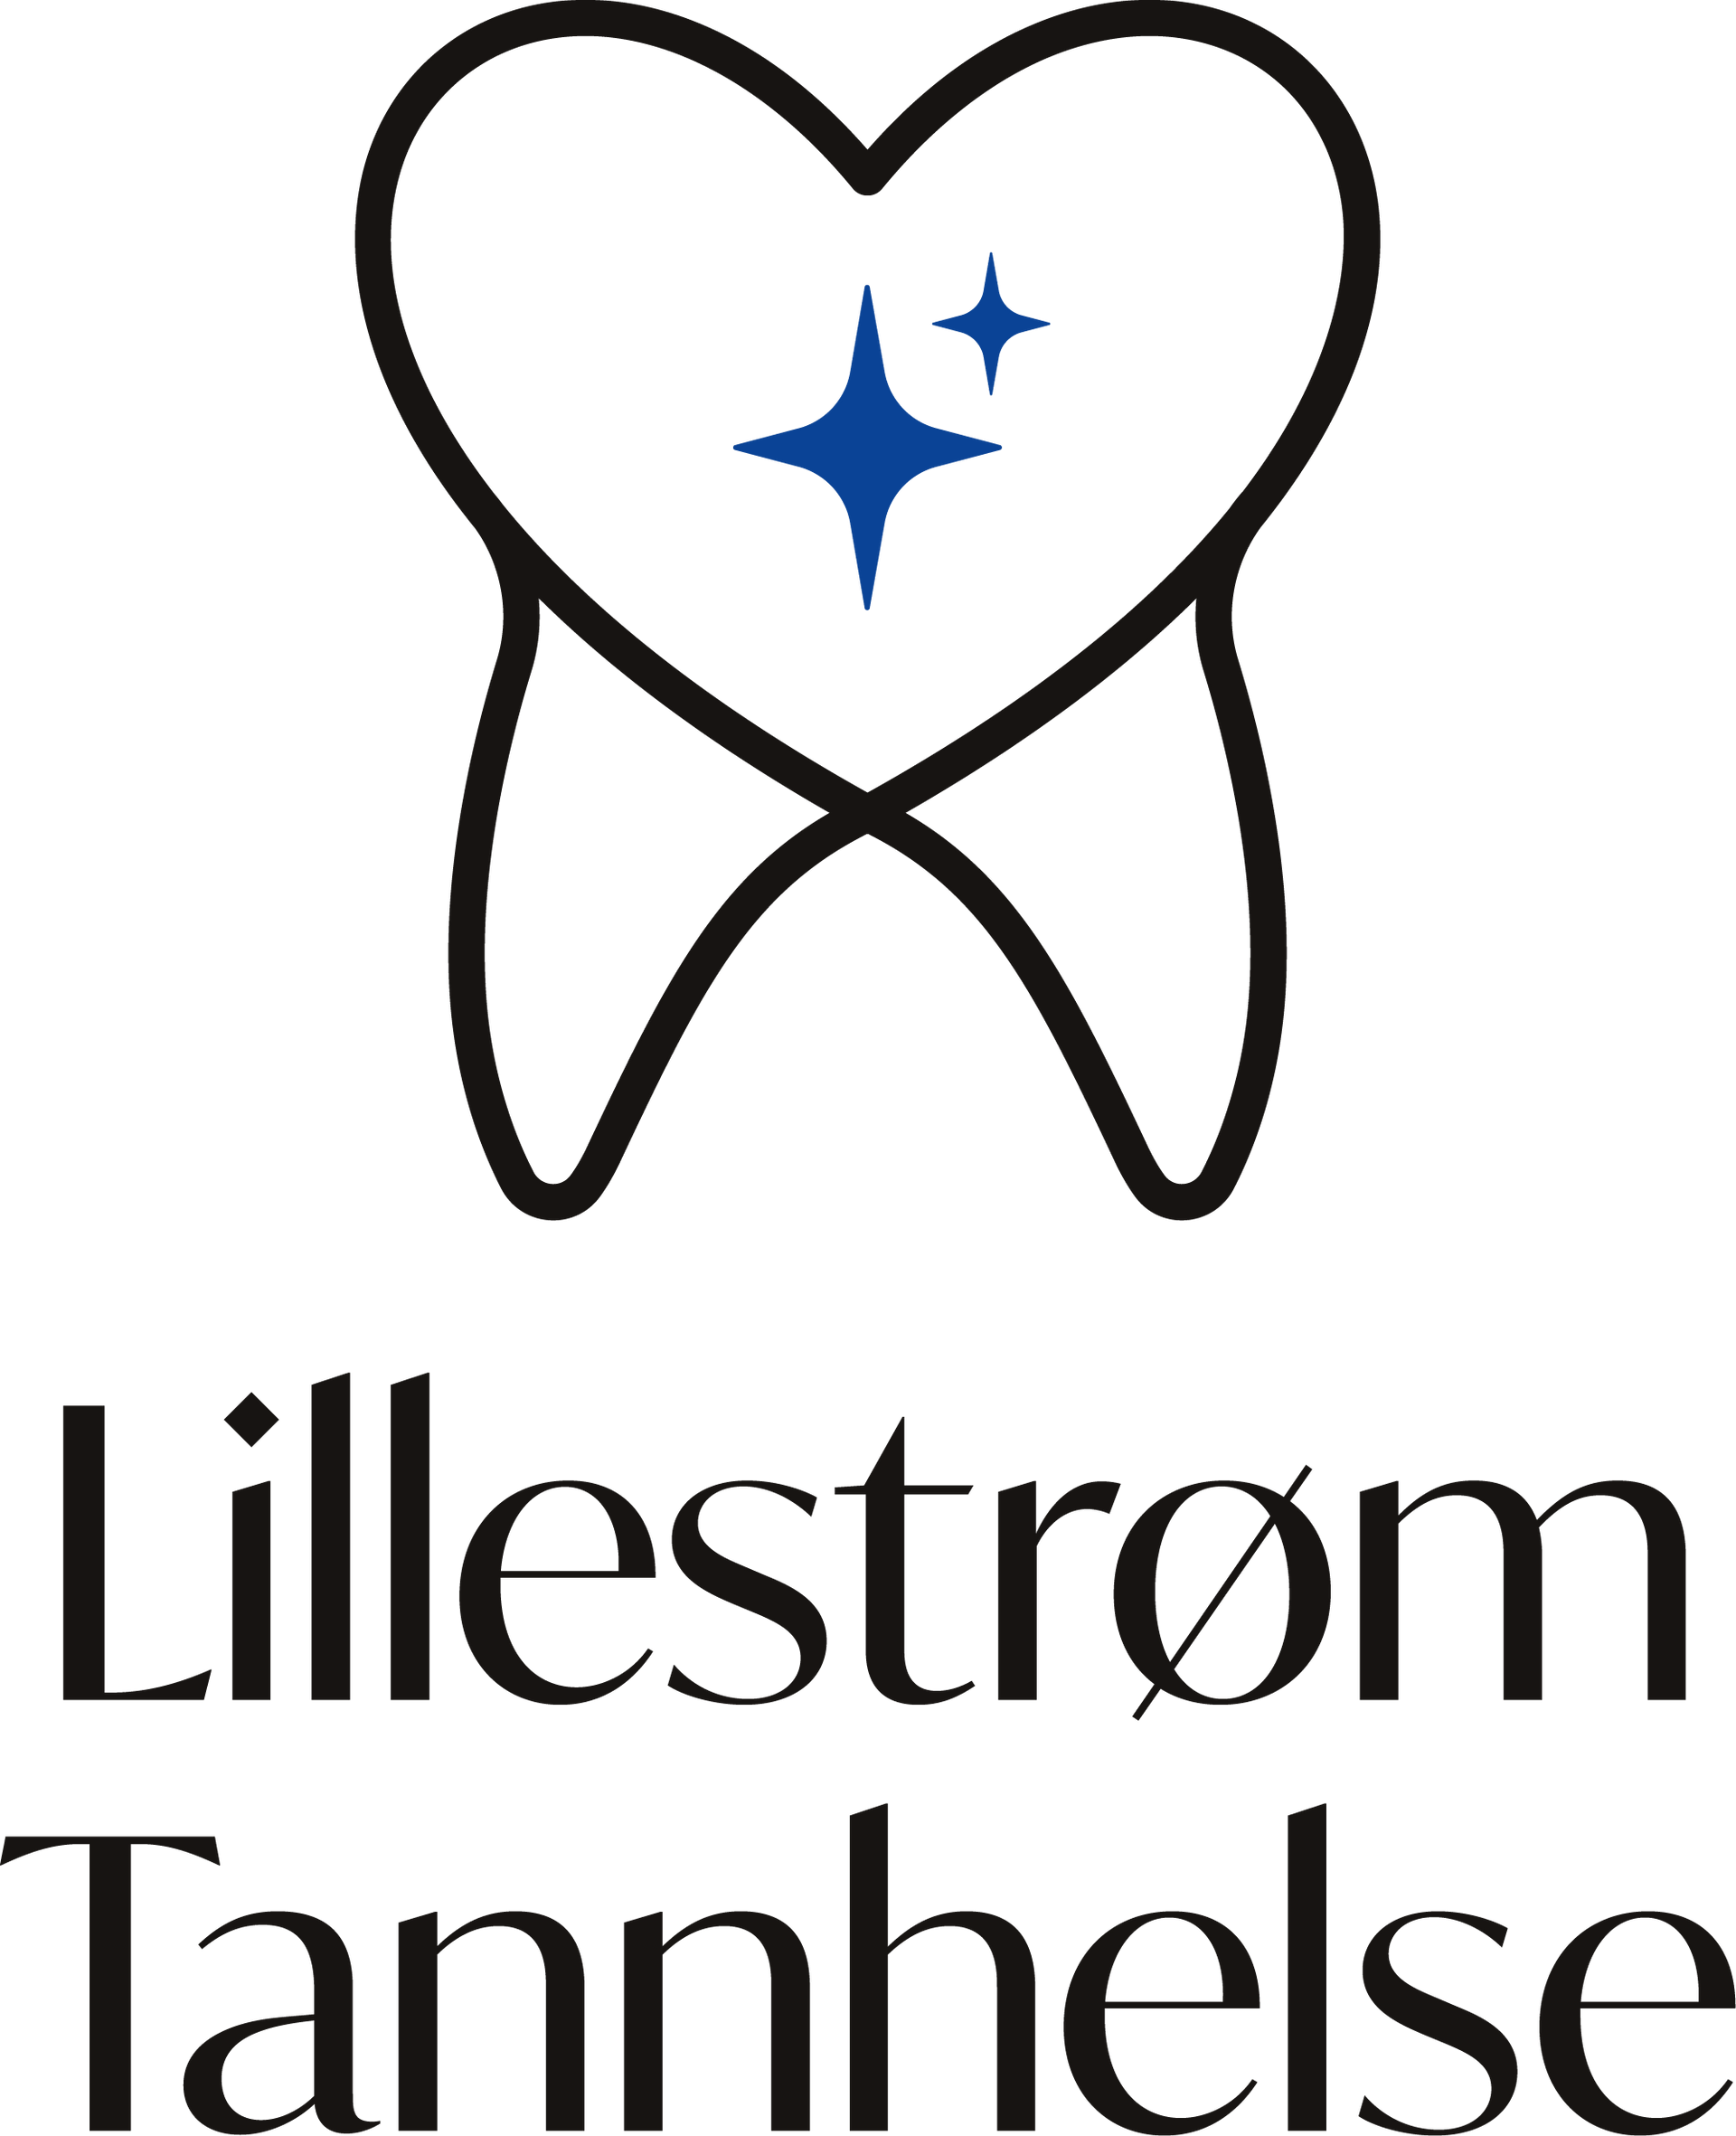 Logoen til Lillestrøm Tannhelse